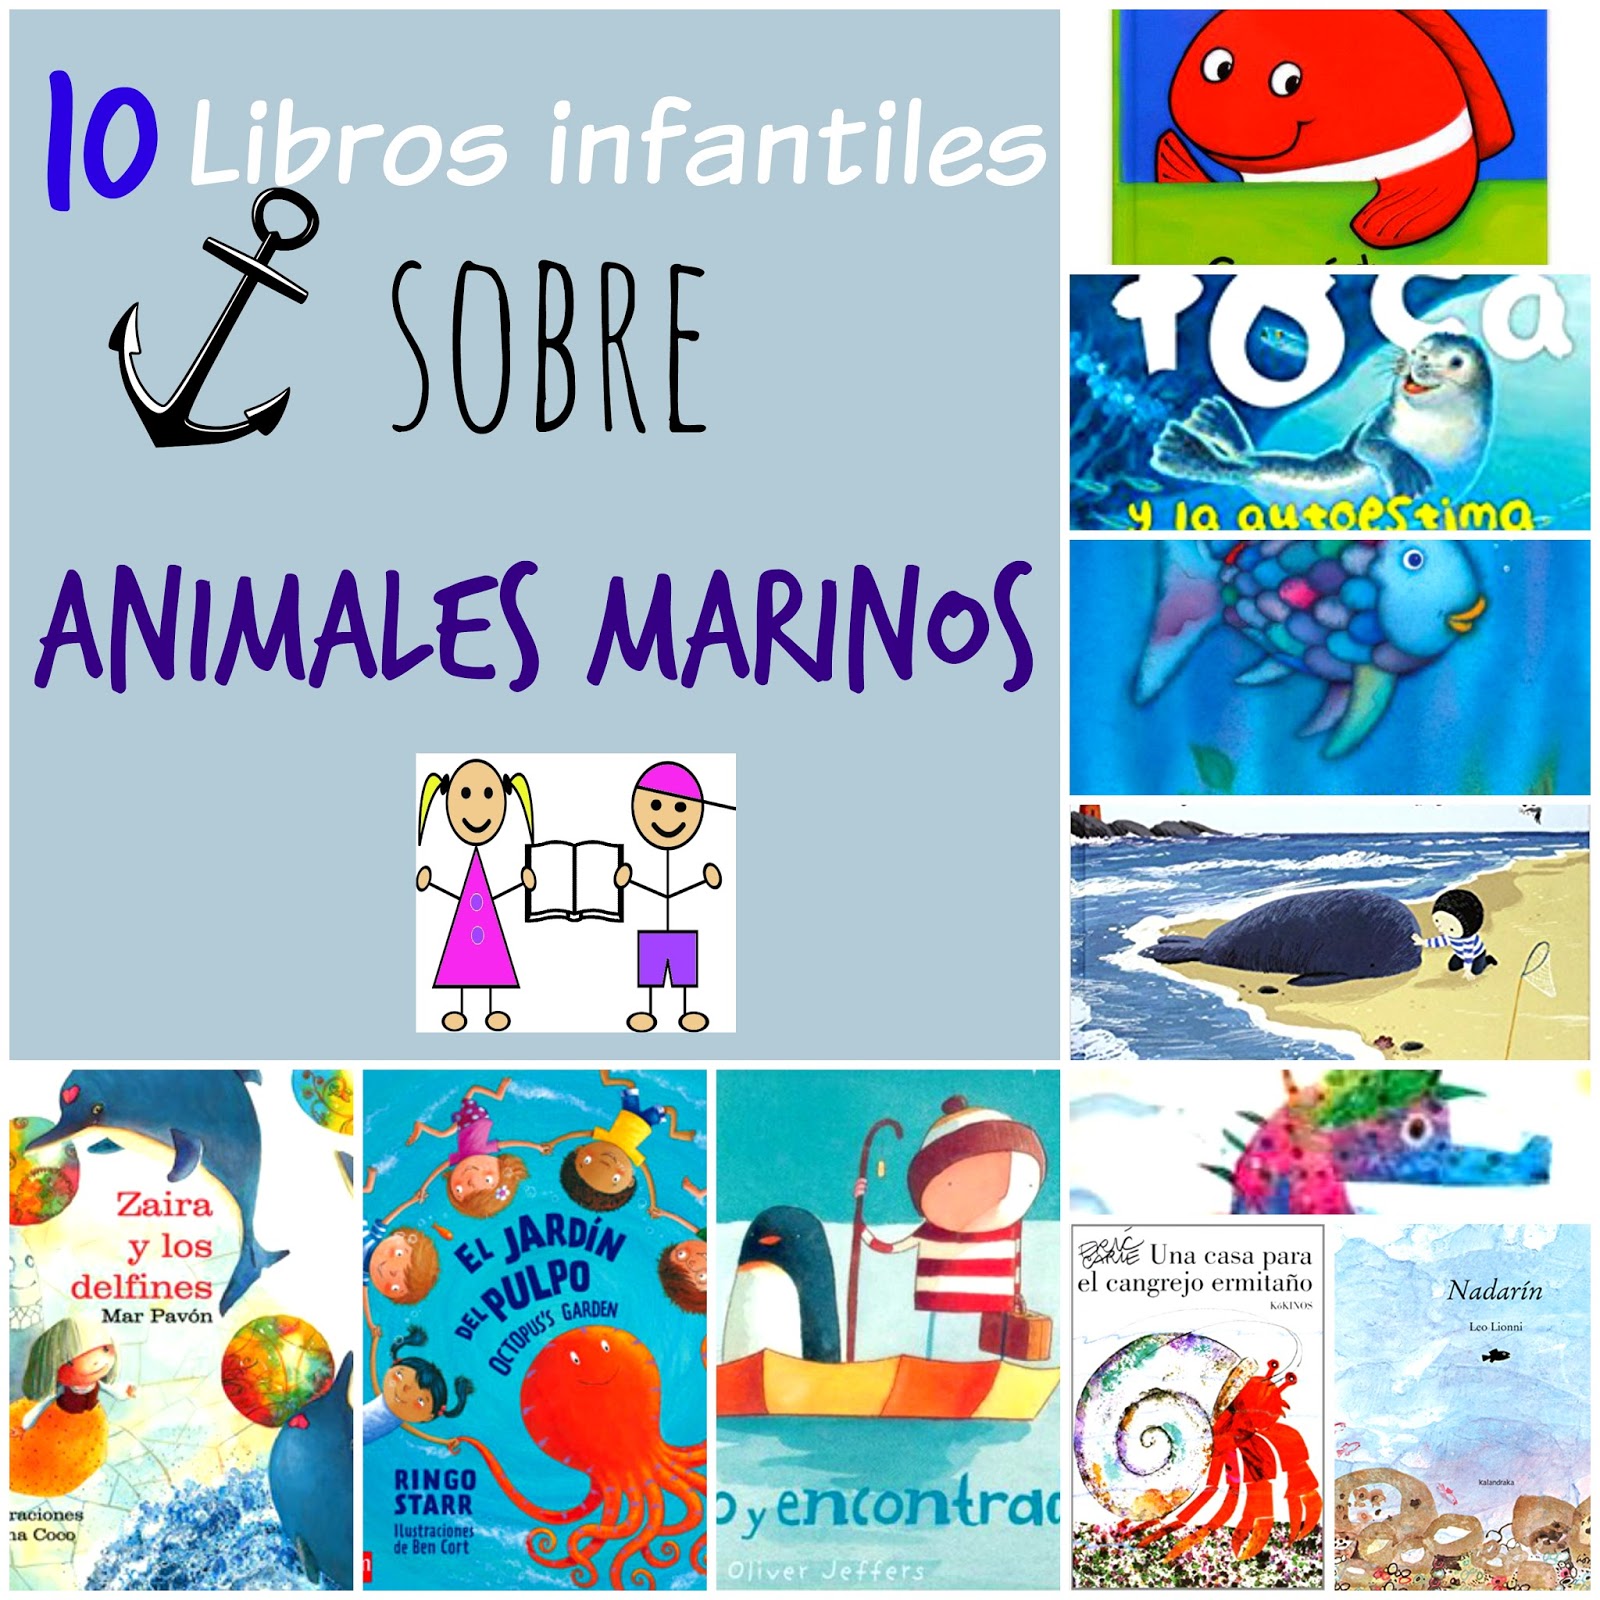 TOP 10 LIBROS INFANTILES SOBRE ANIMALES MARINOS